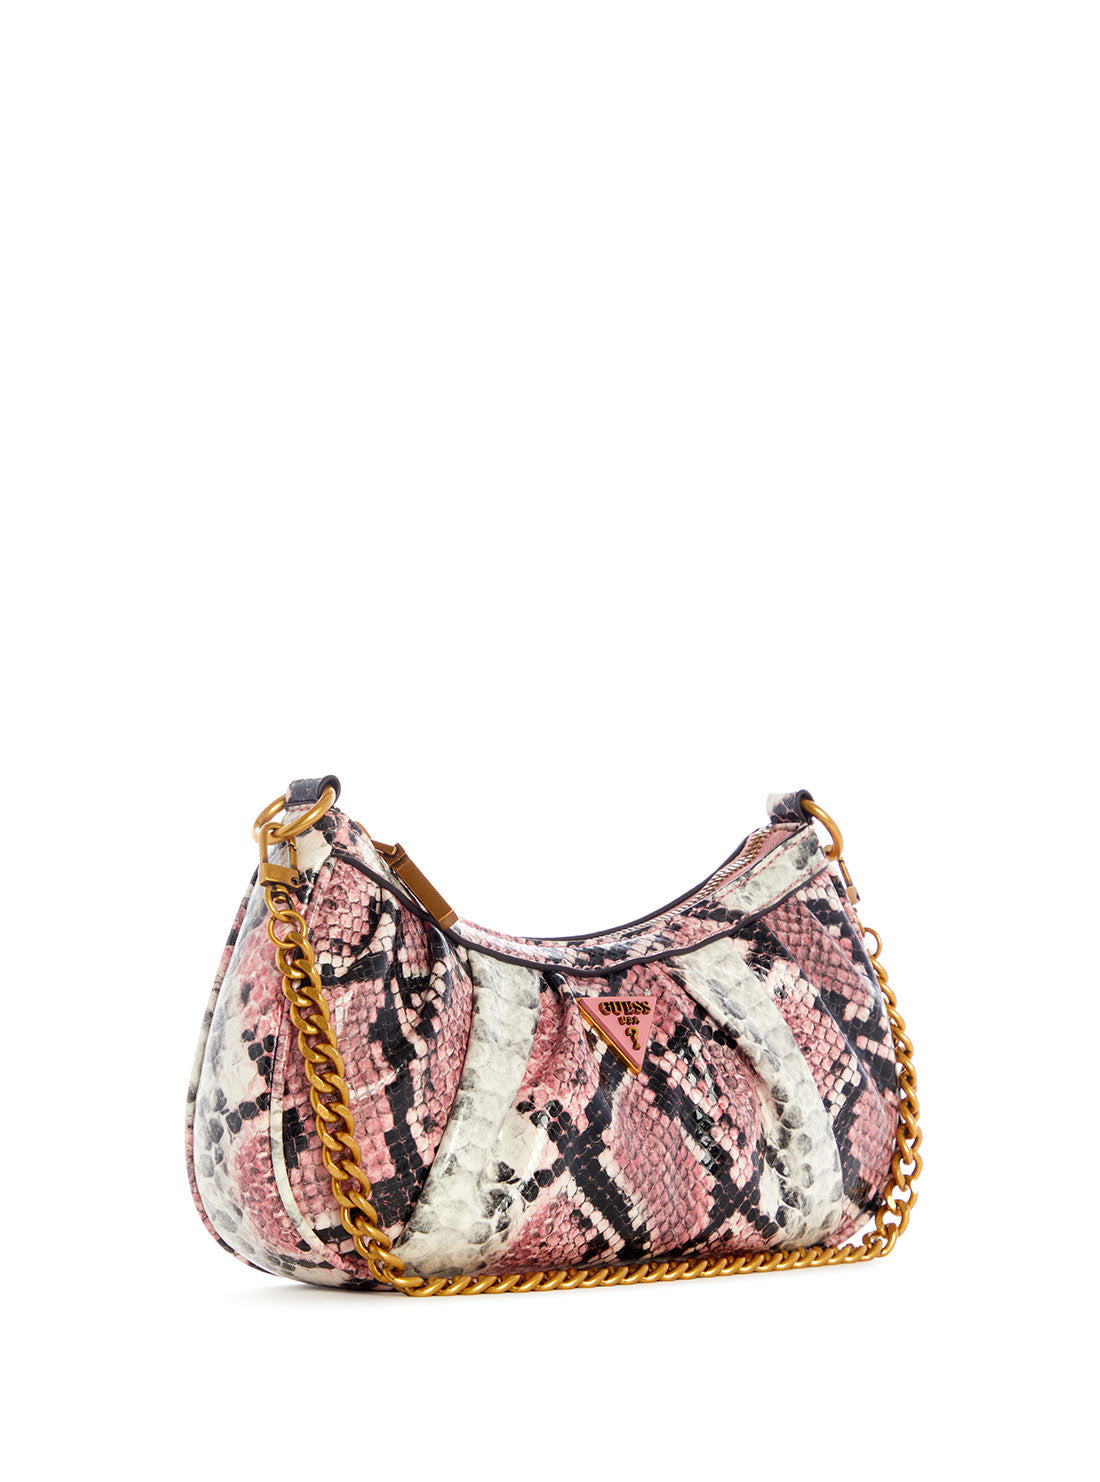 GUESS Womens Pink Python Mariana Shoulder Bag KB855072 Front View